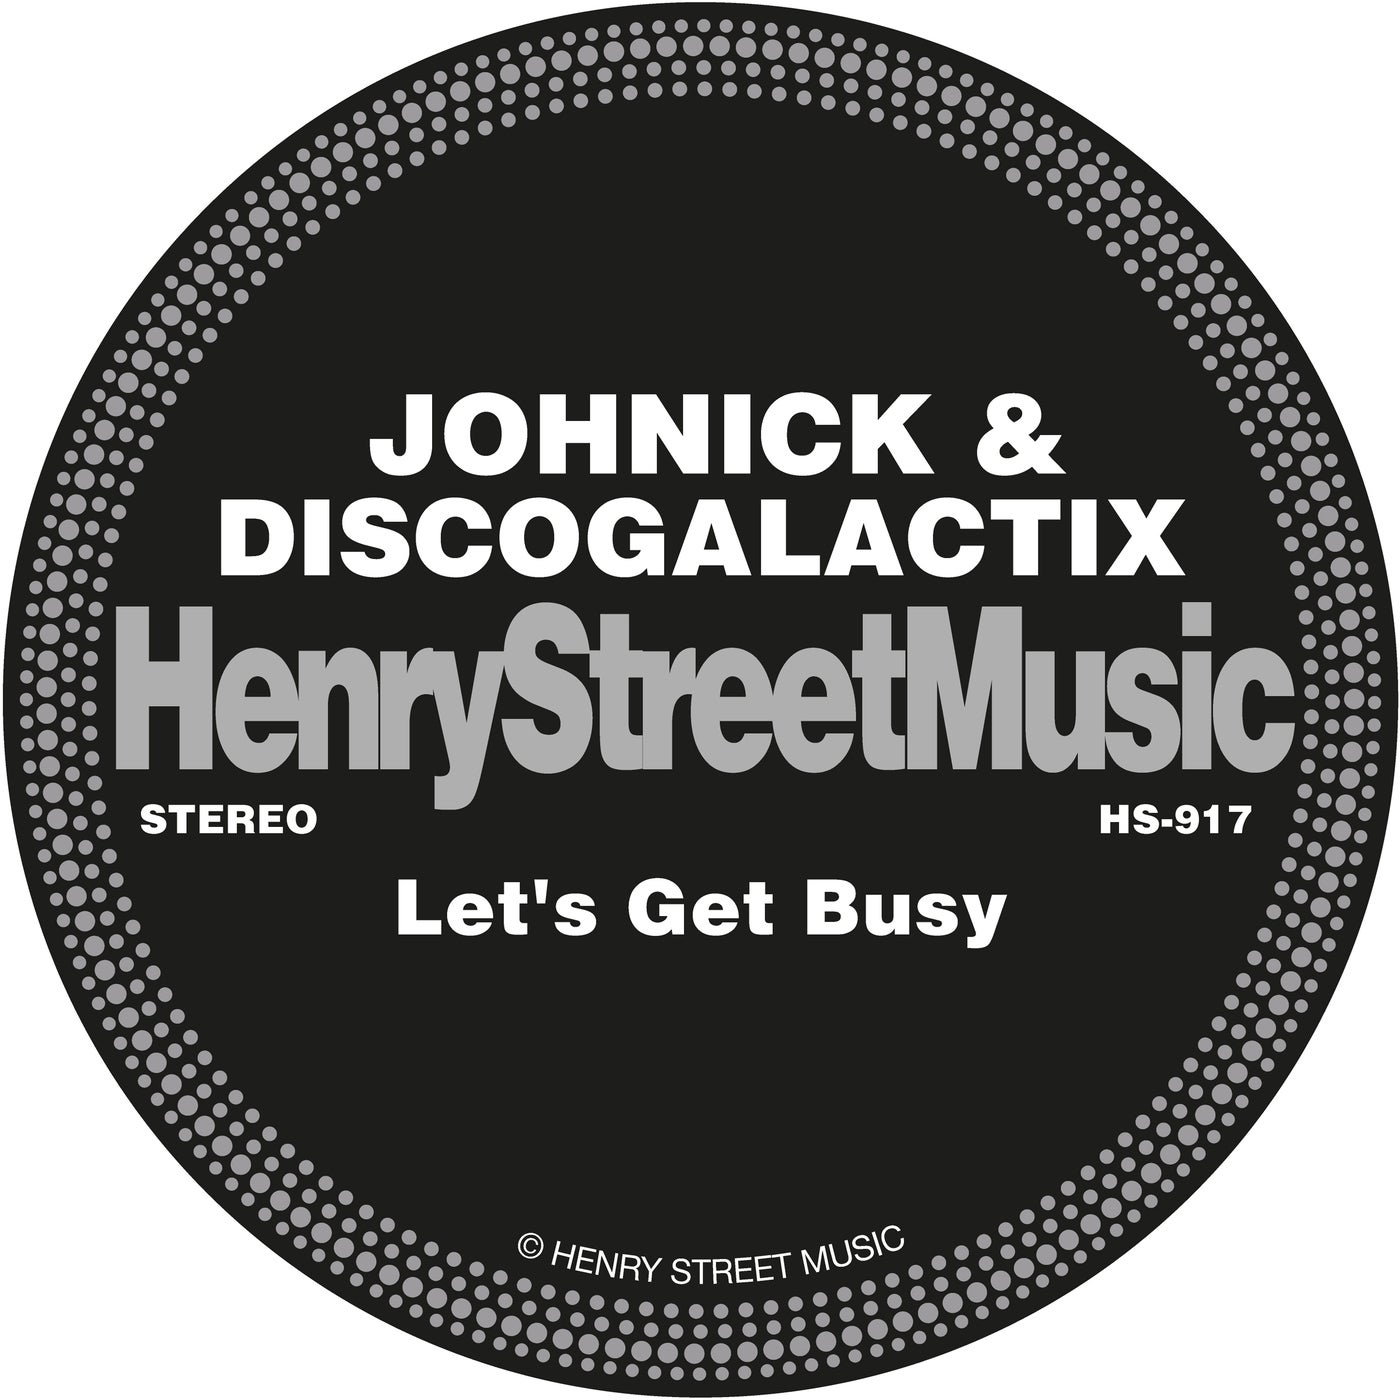 Henry Street Music Music & Downloads on Beatport